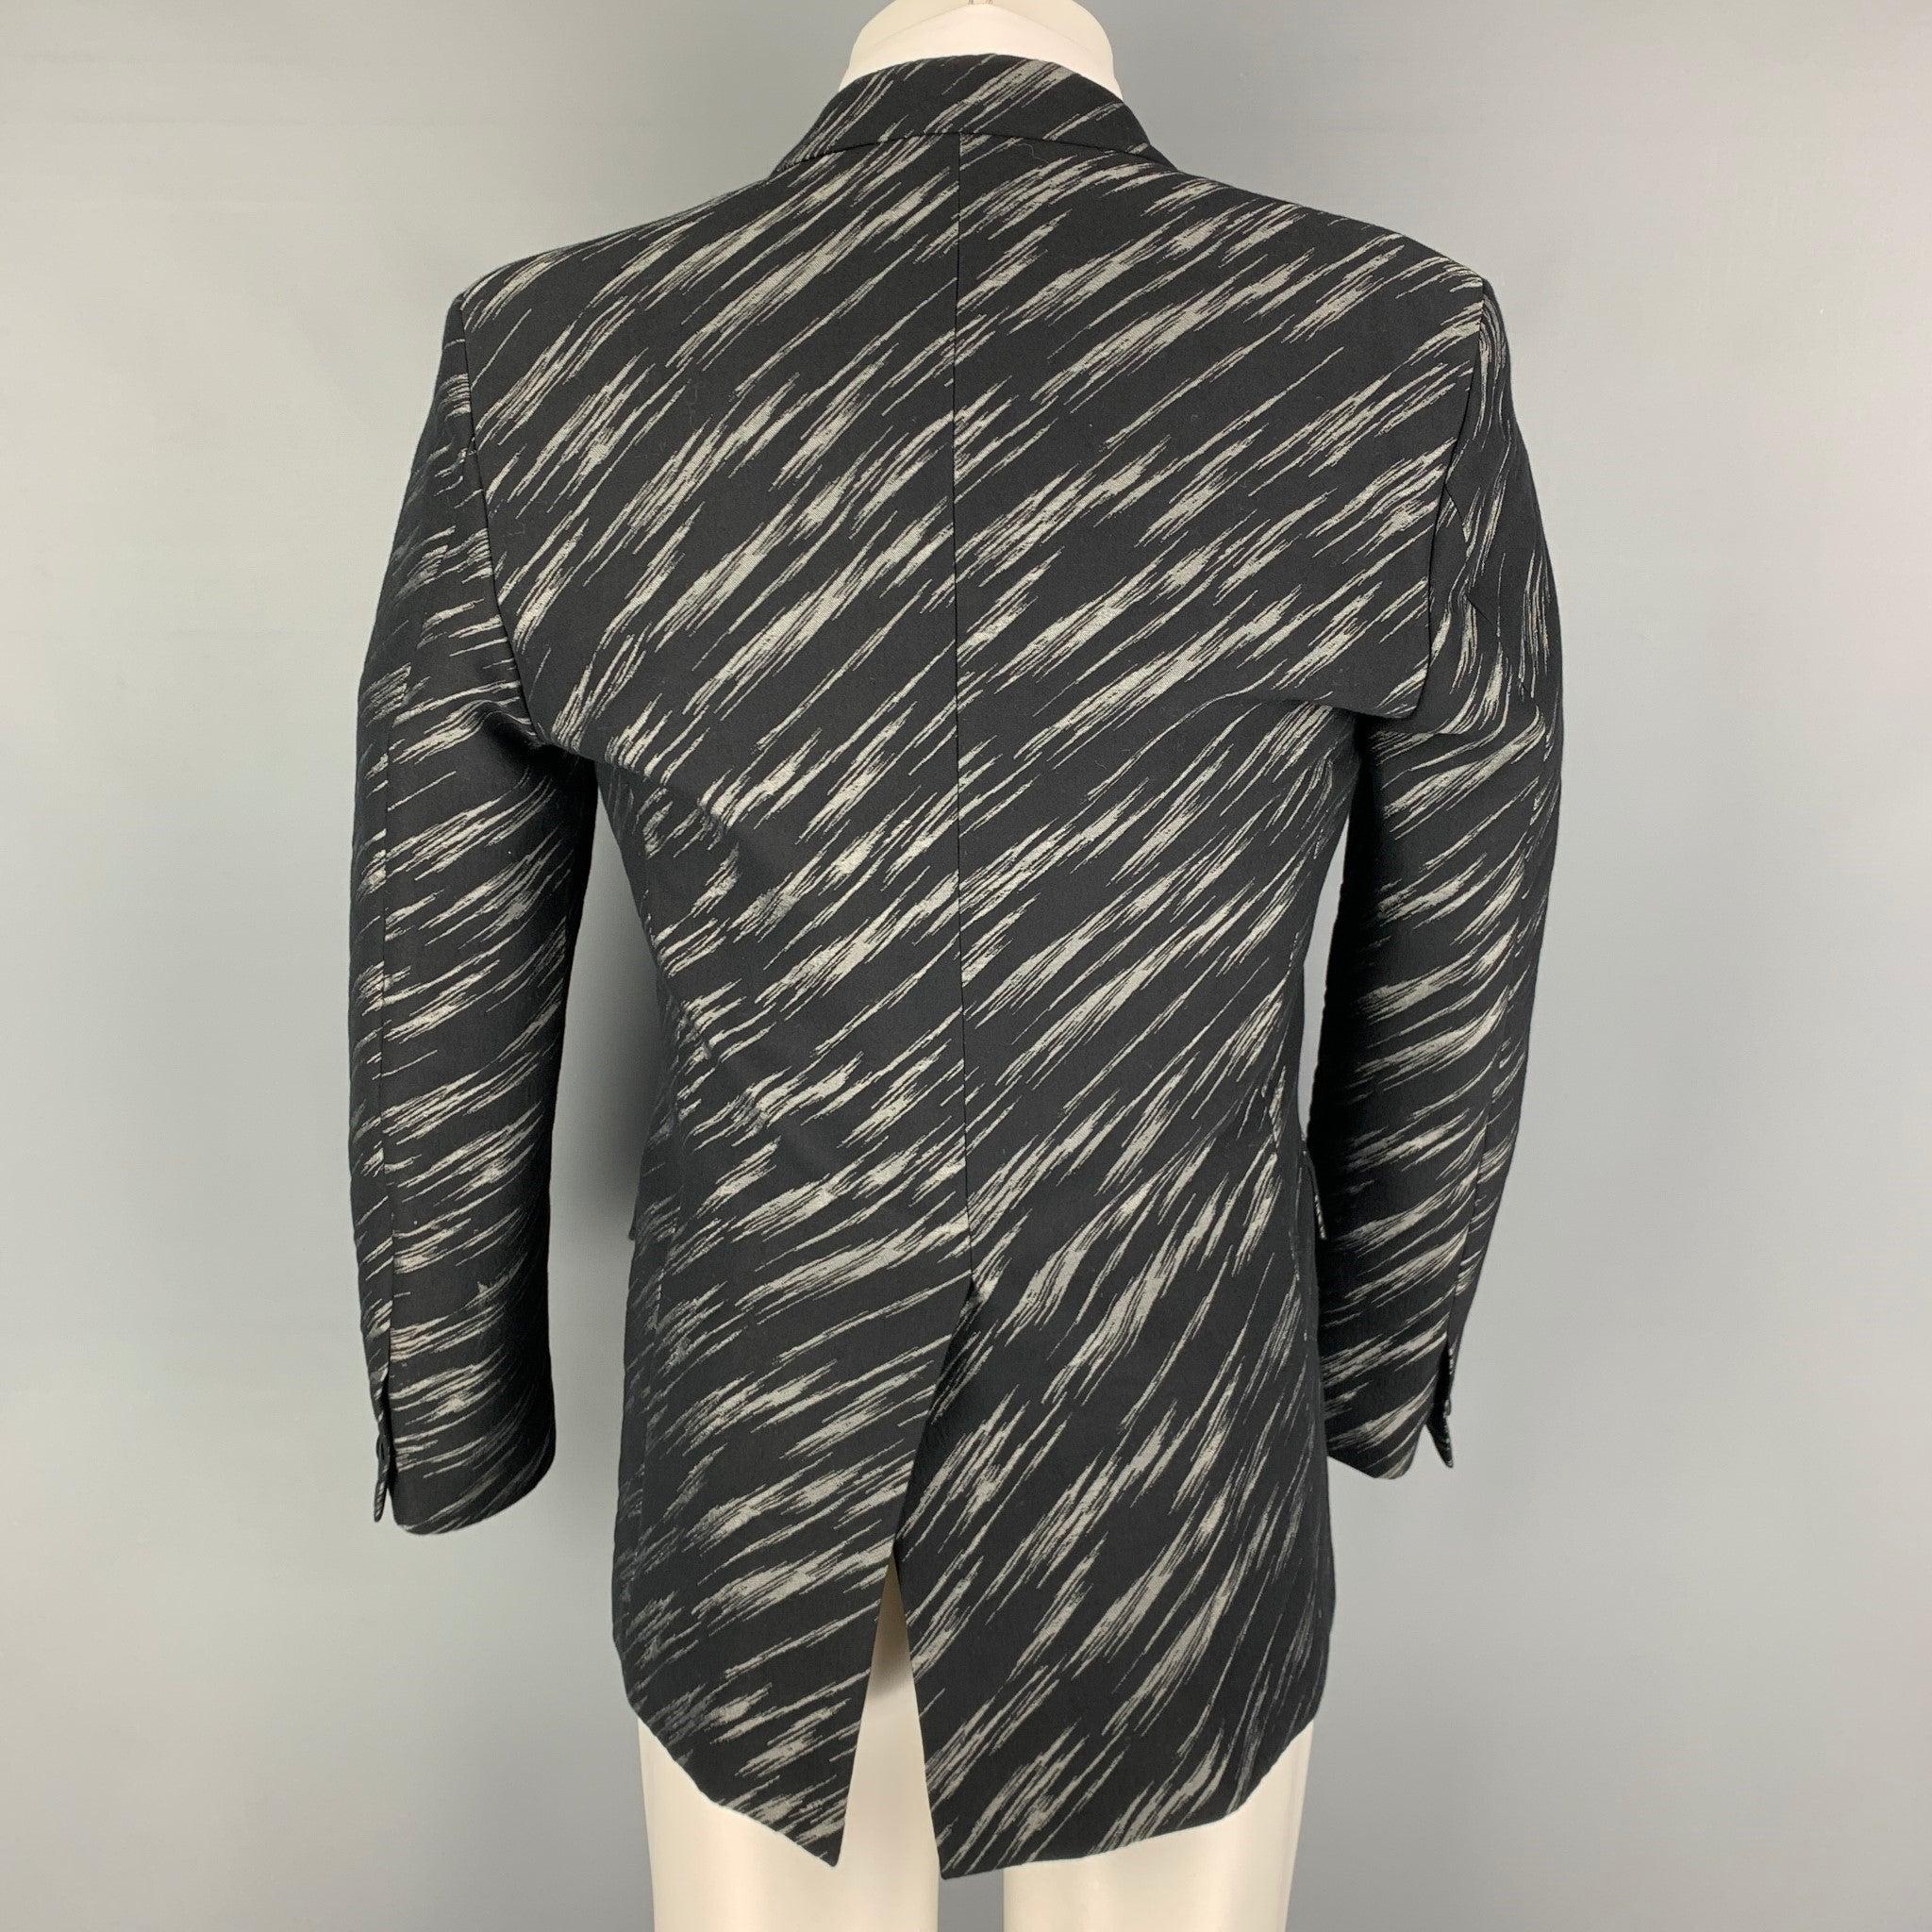 JUST CAVALLI Size 38 Black Grey Jacquard Wool Blend Peak Lapel Sport Coat For Sale 1